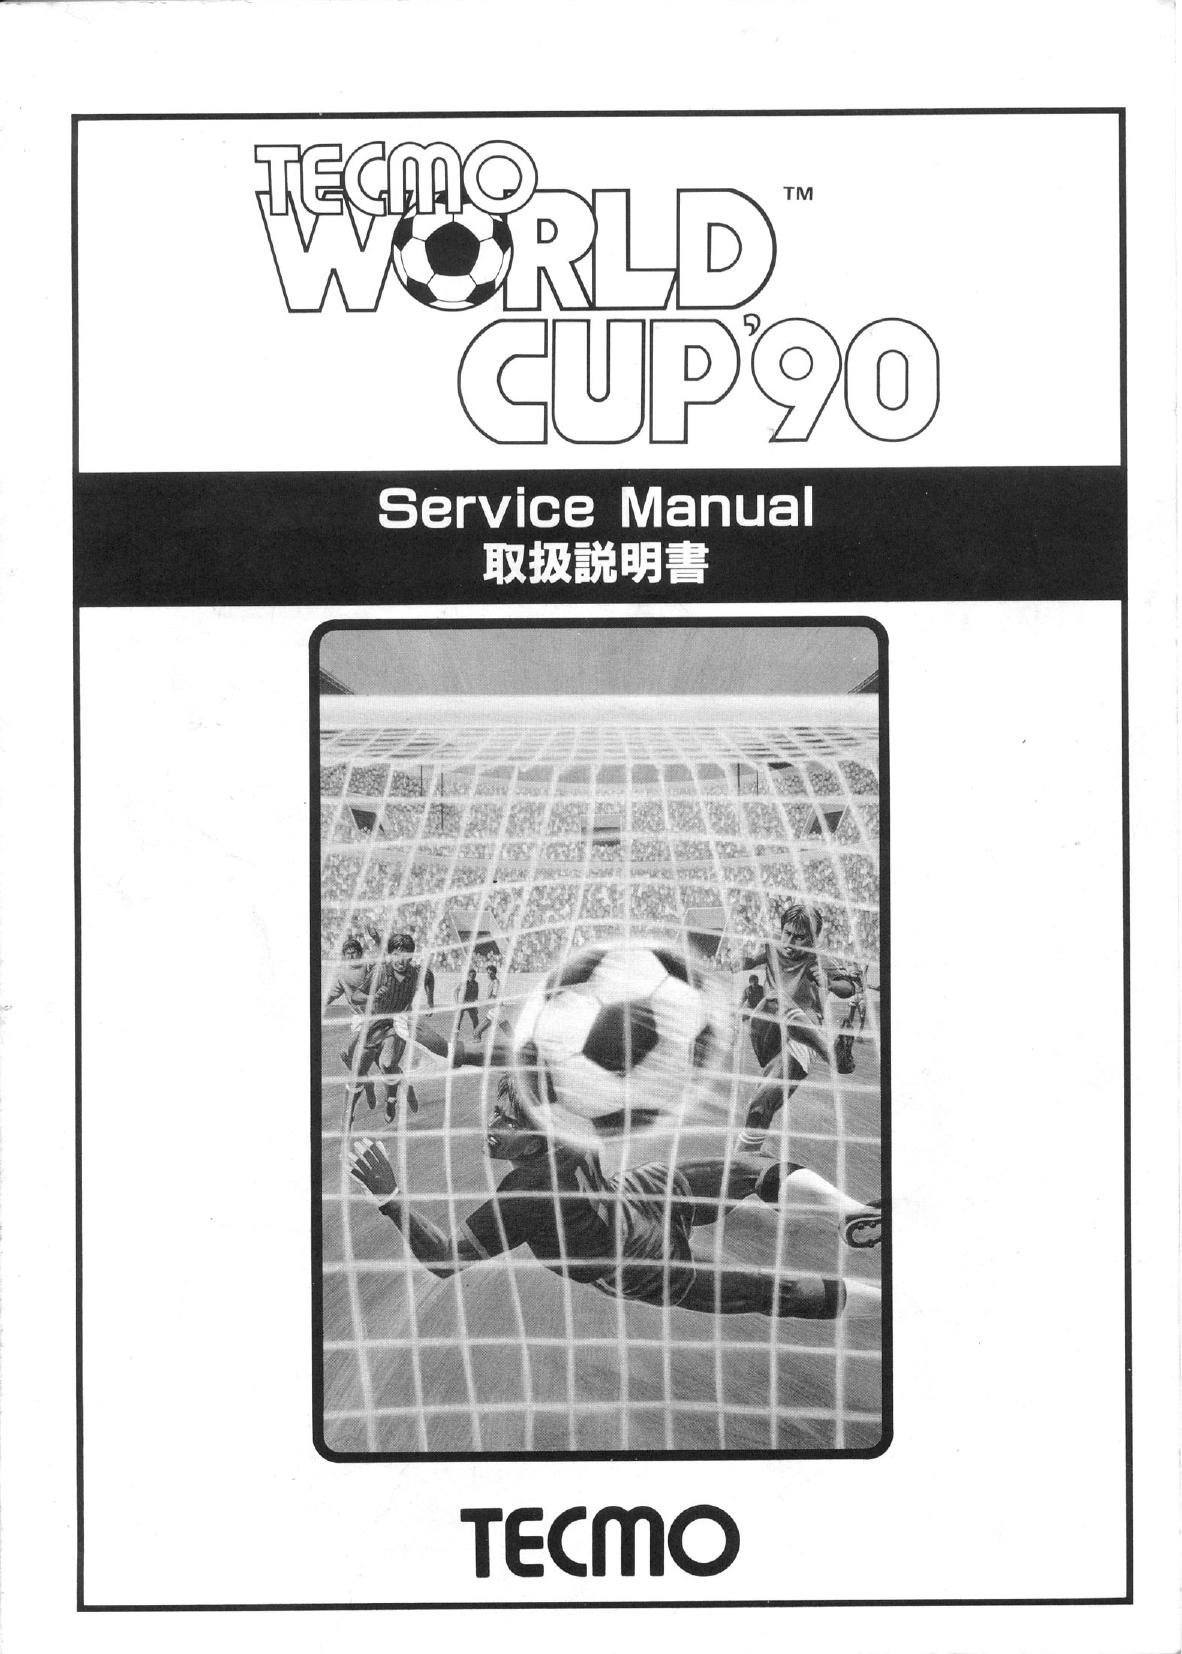 World Cup 90 (Service) (JA)